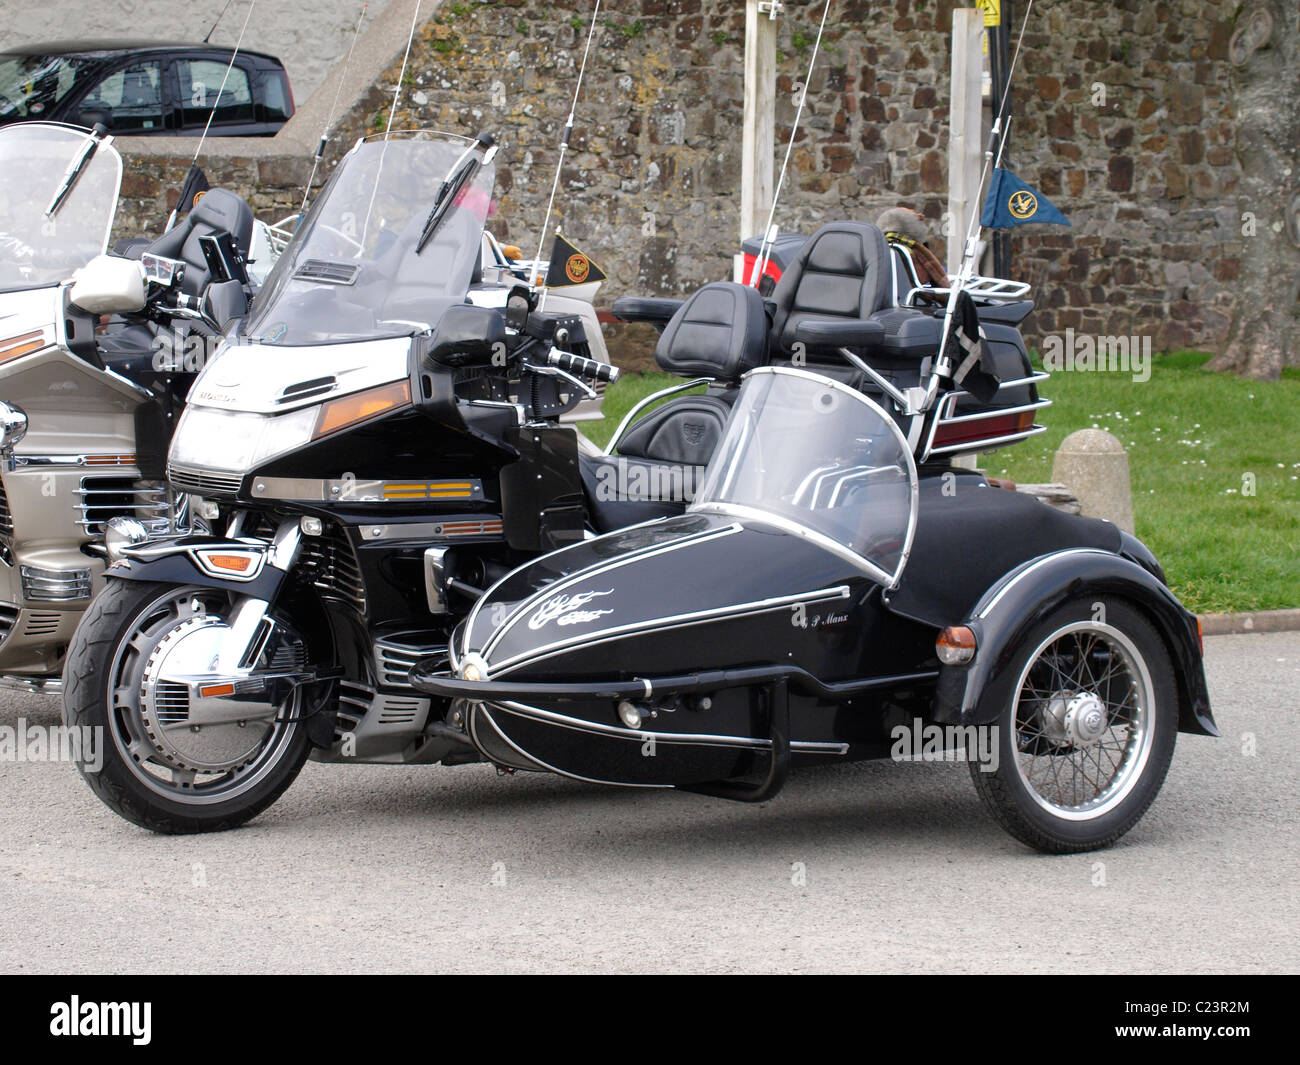 Honda Motorrad und Beiwagen, Bude, Cornwall, UK Stockfoto